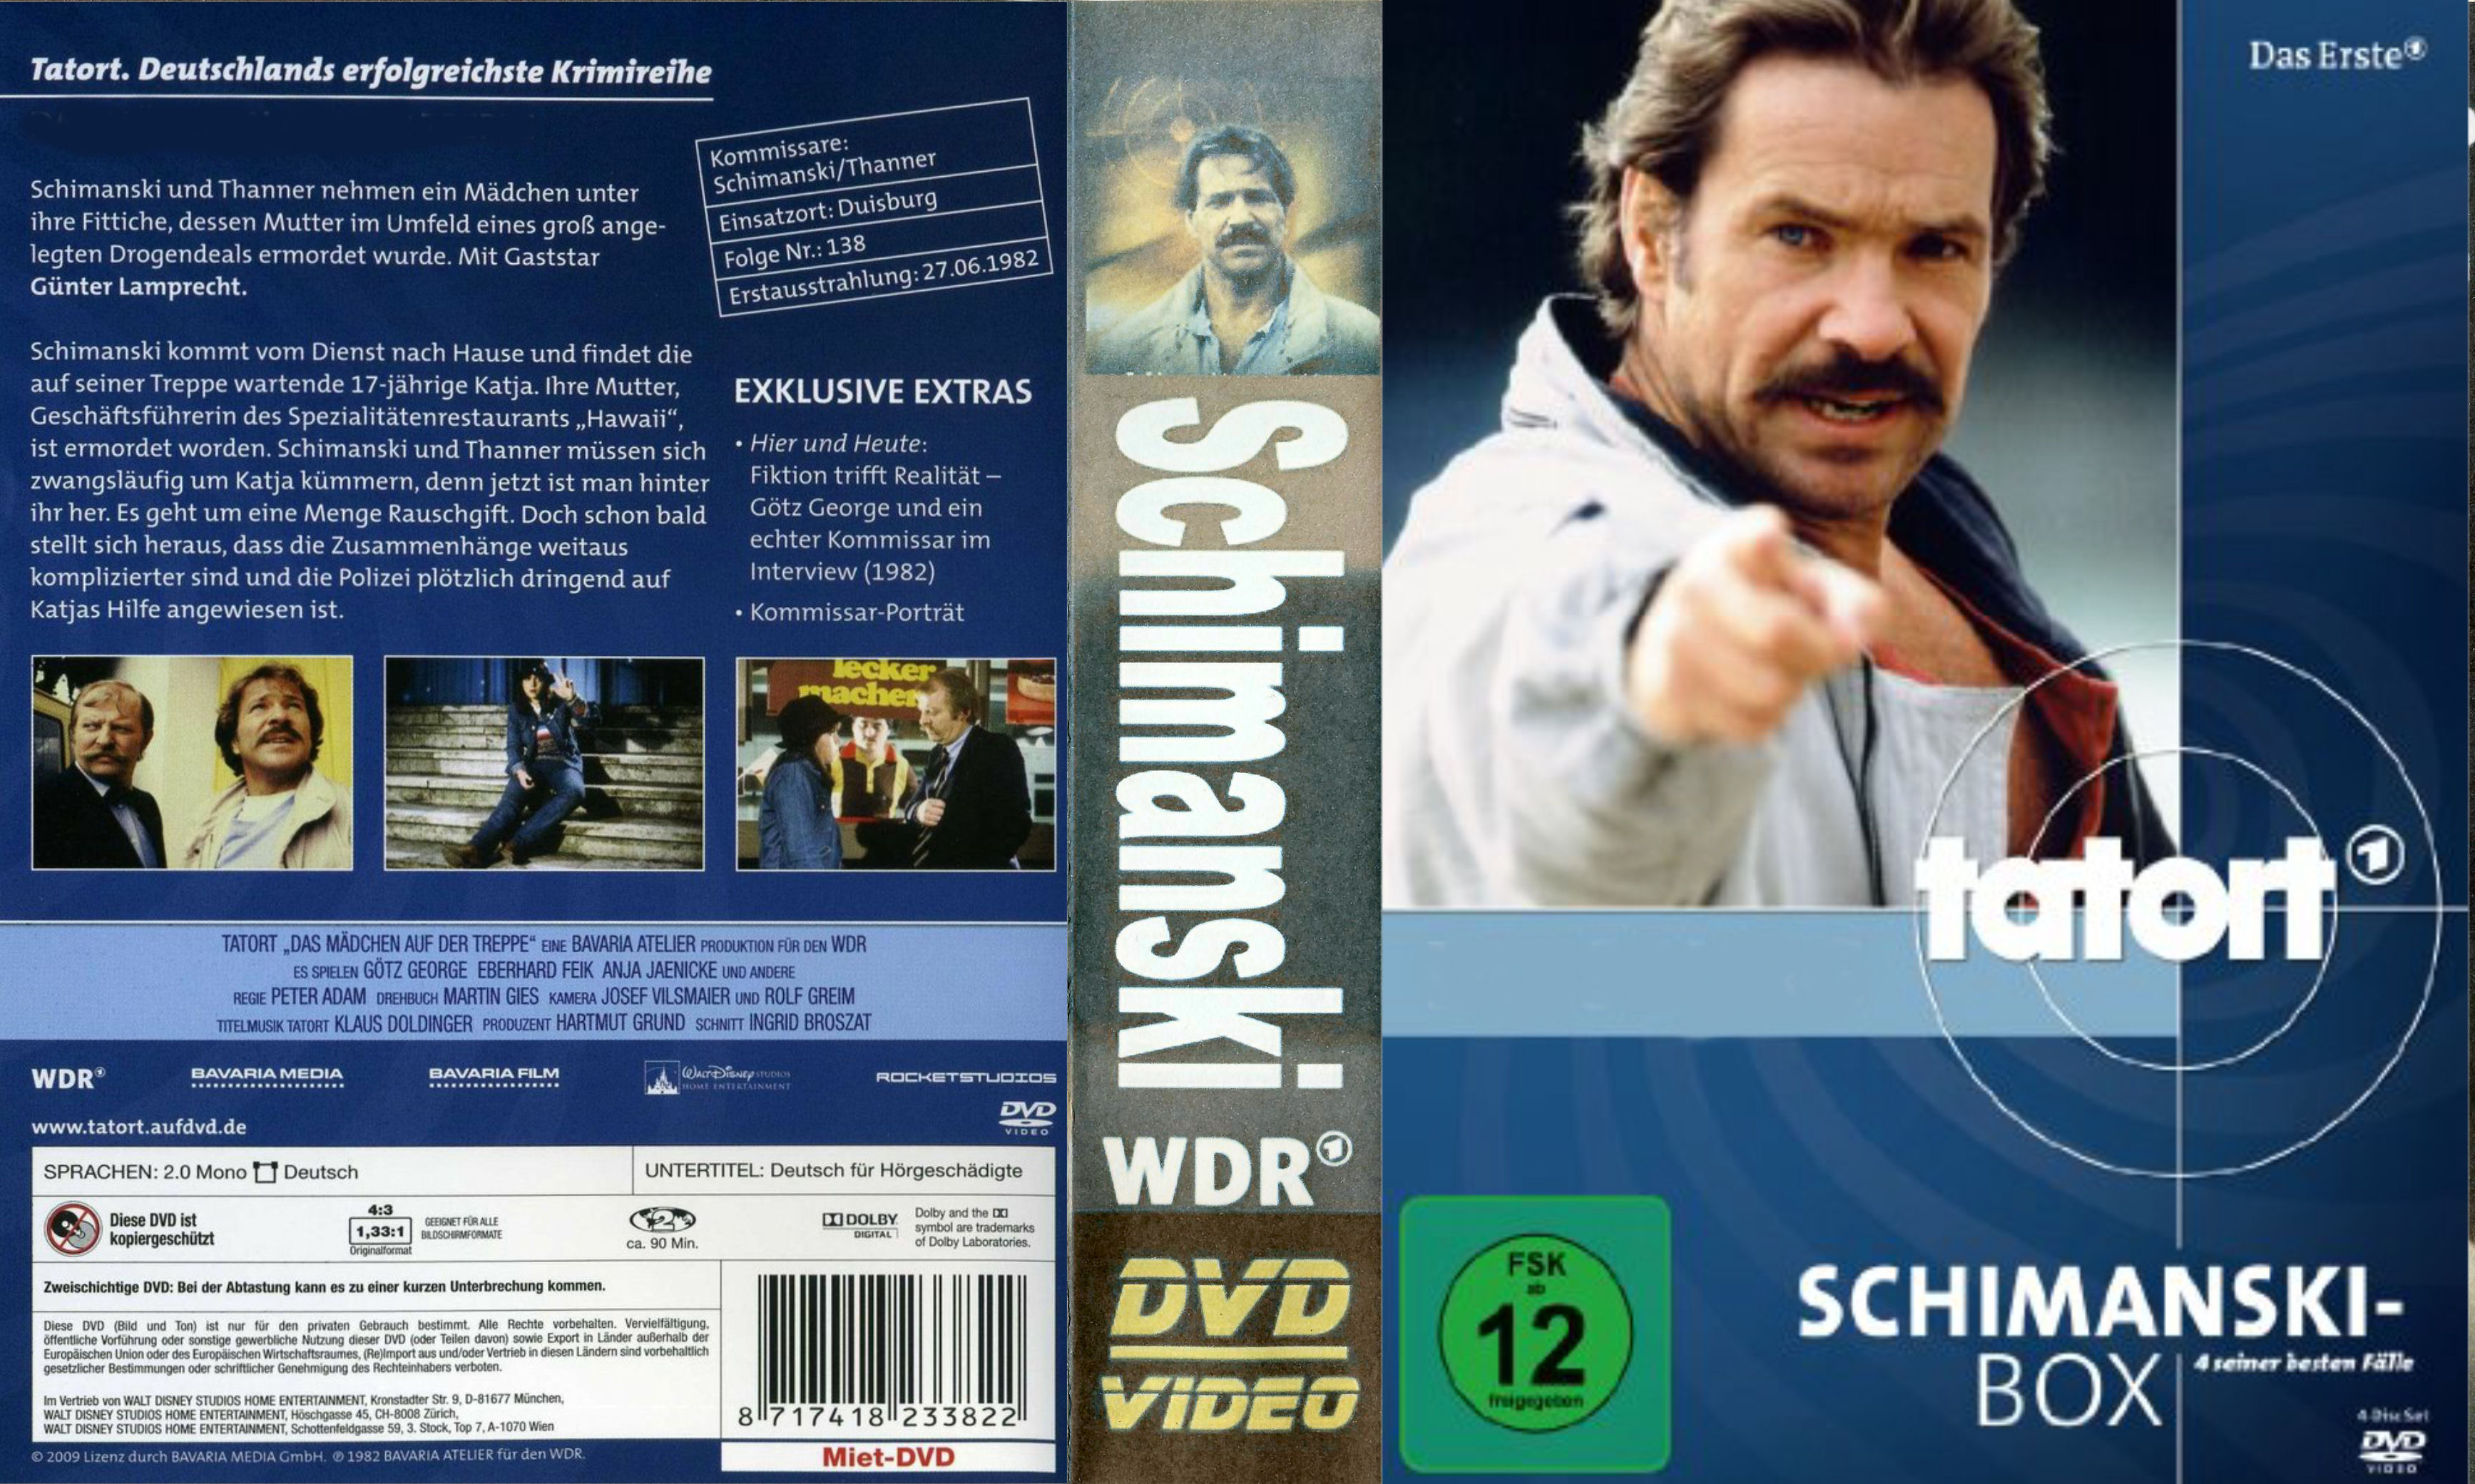 Schimanski Collectie Tatort No Subs - DvD 6